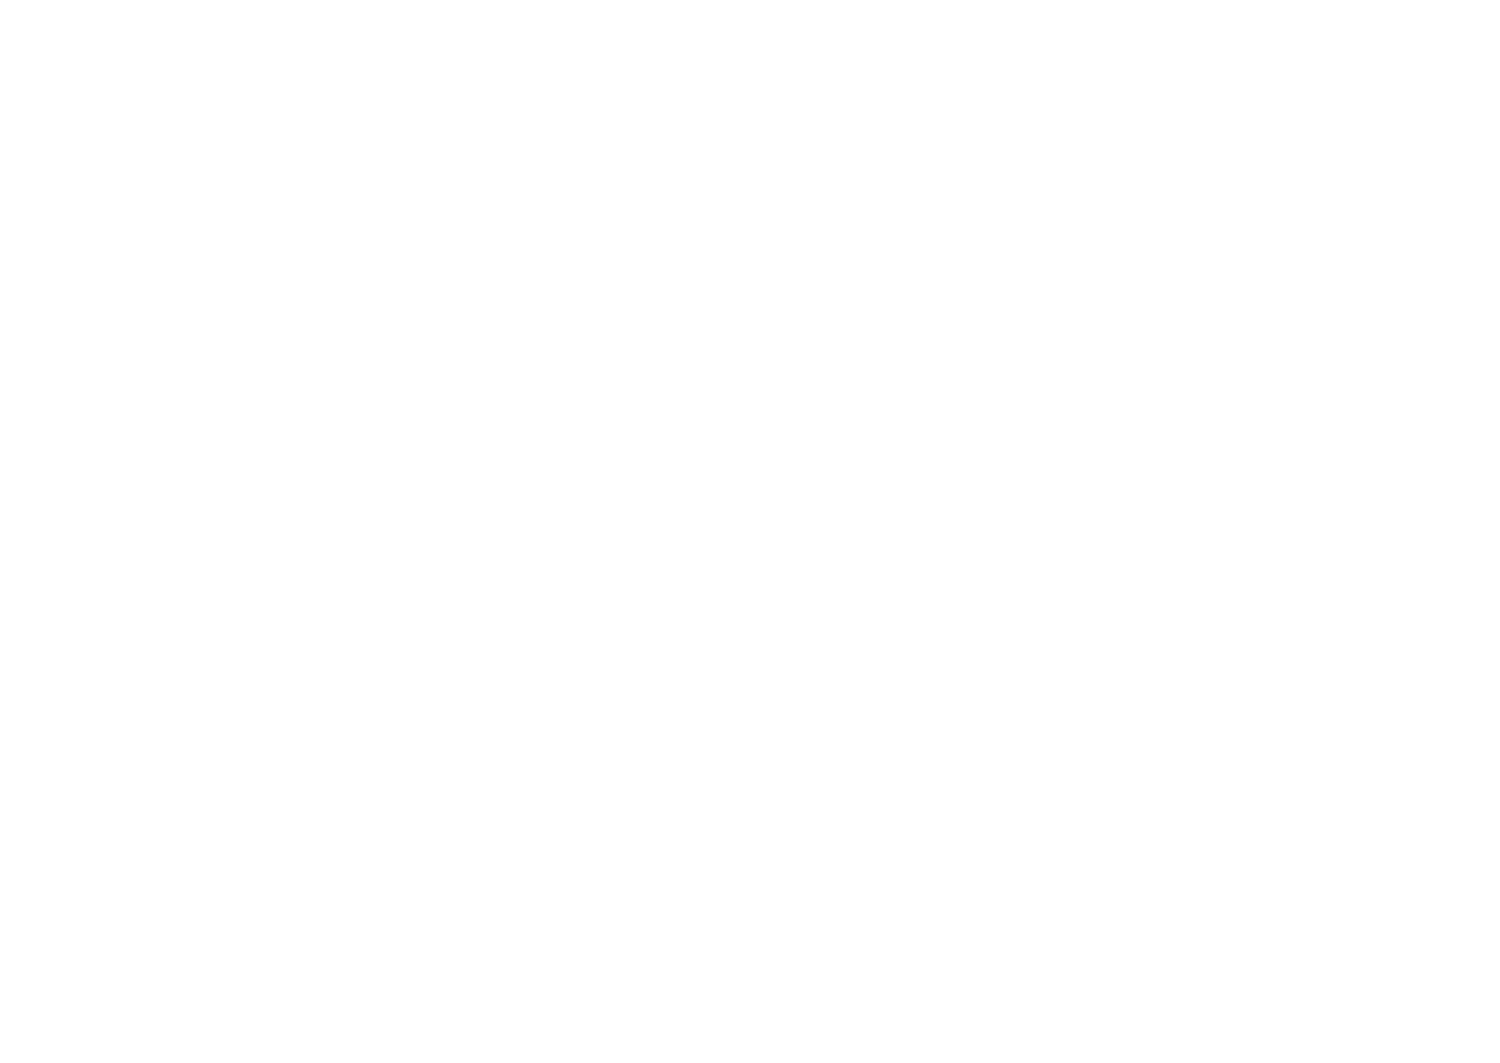 THE UPPER DECK